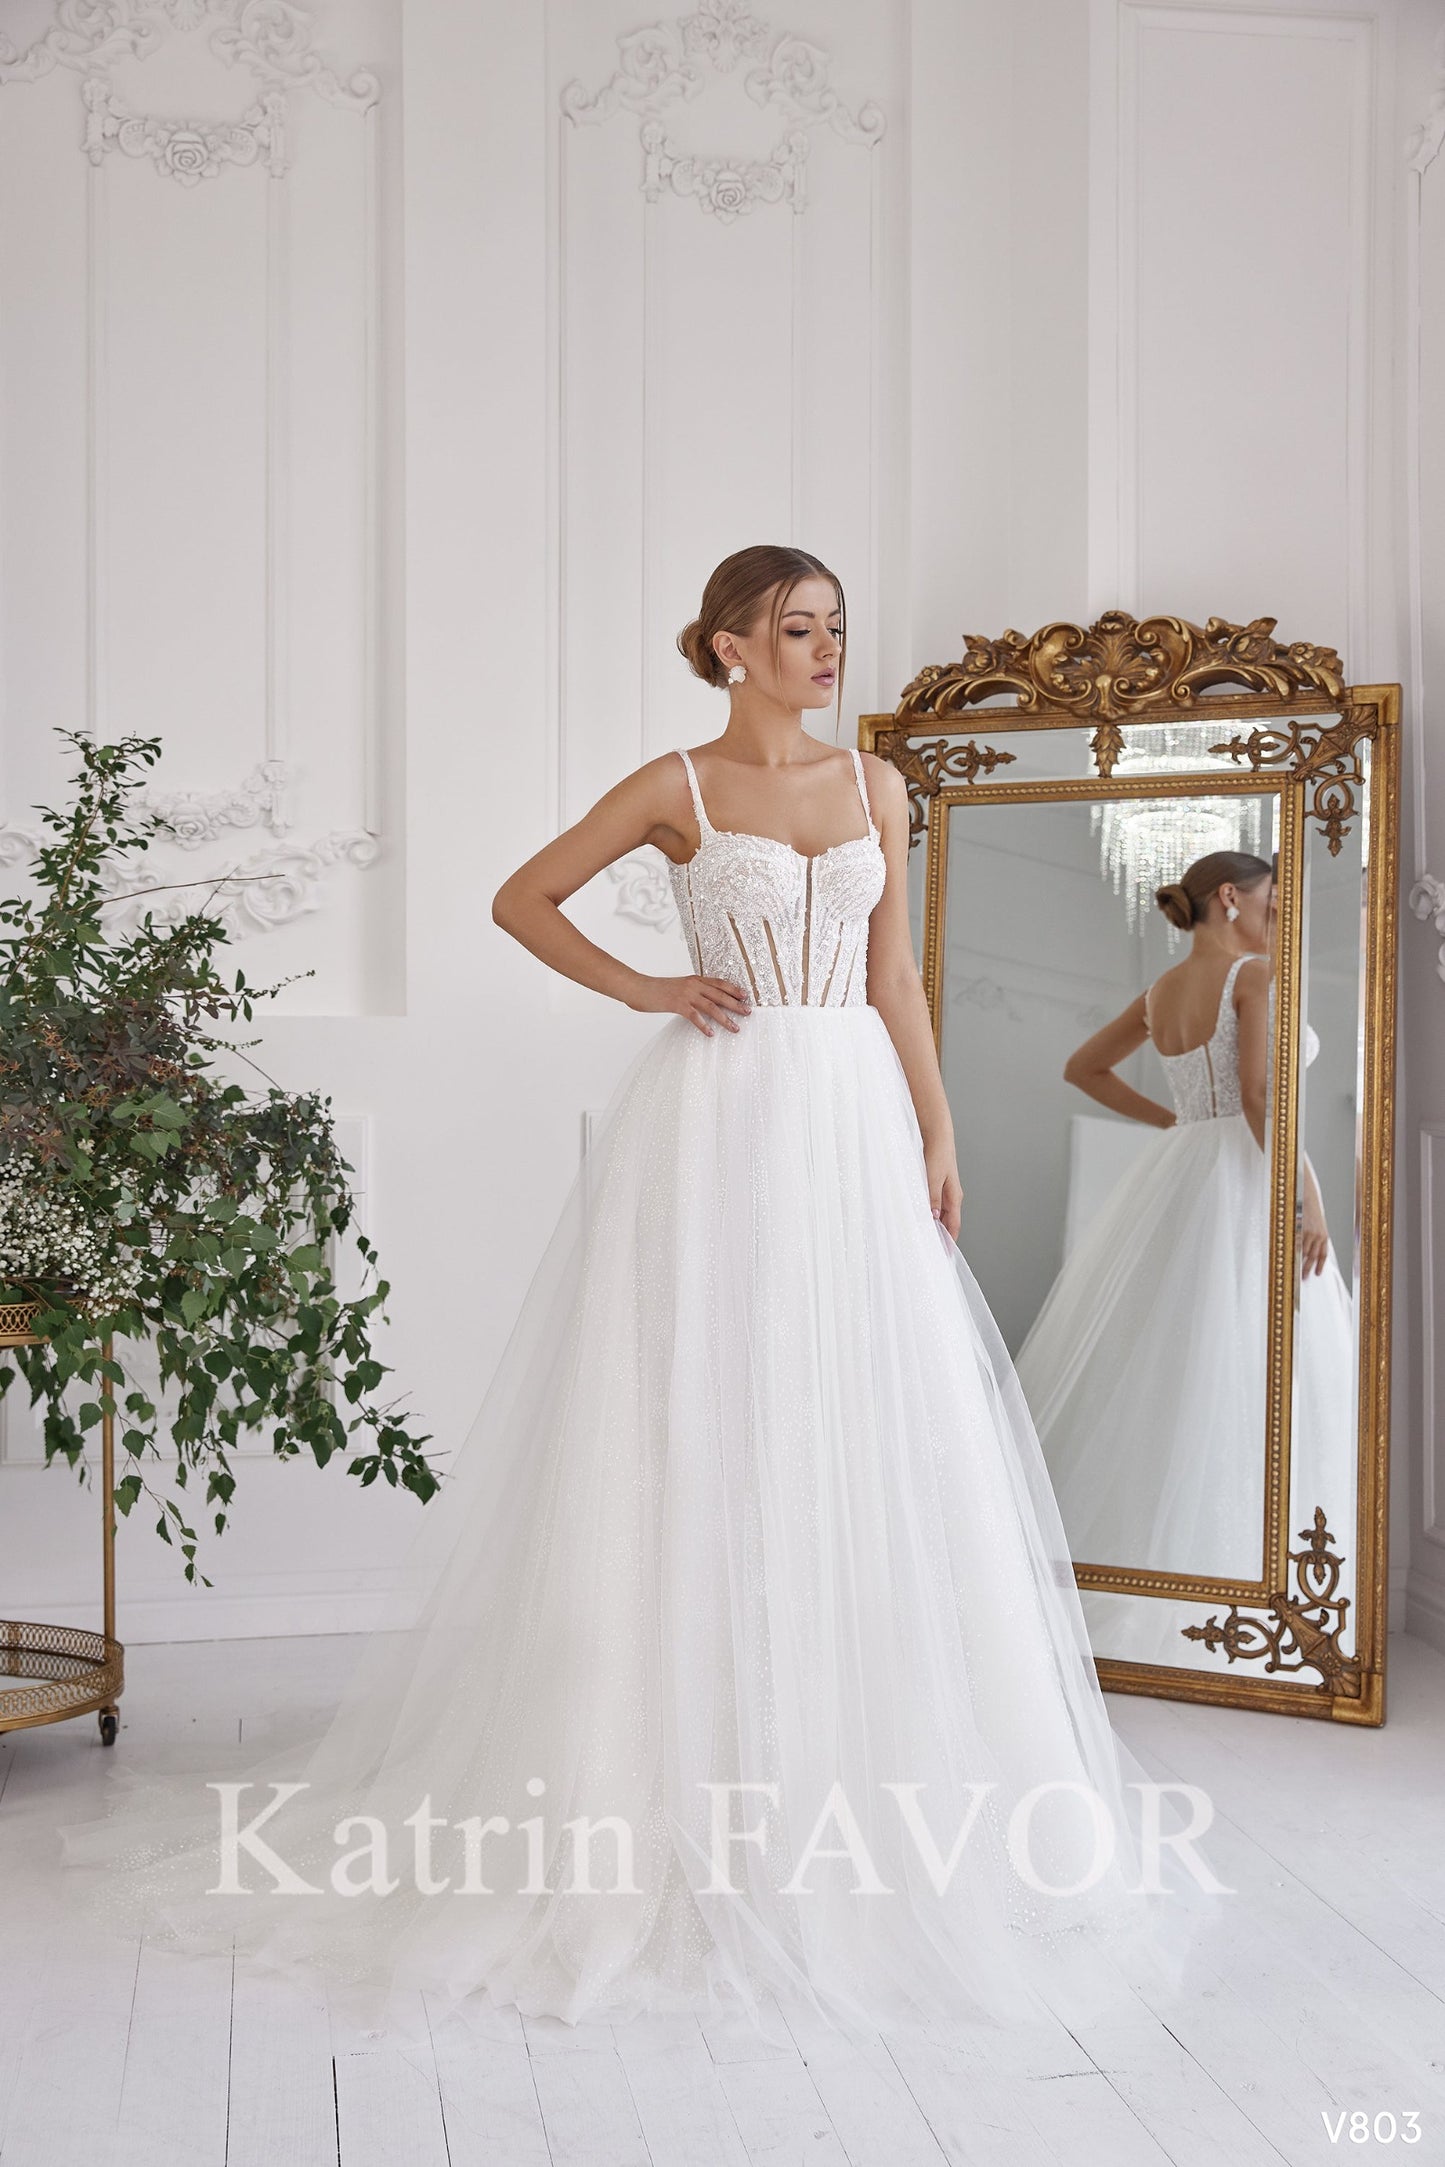 KatrinFAVORboutique-Spaghetti straps bustier corset wedding gown